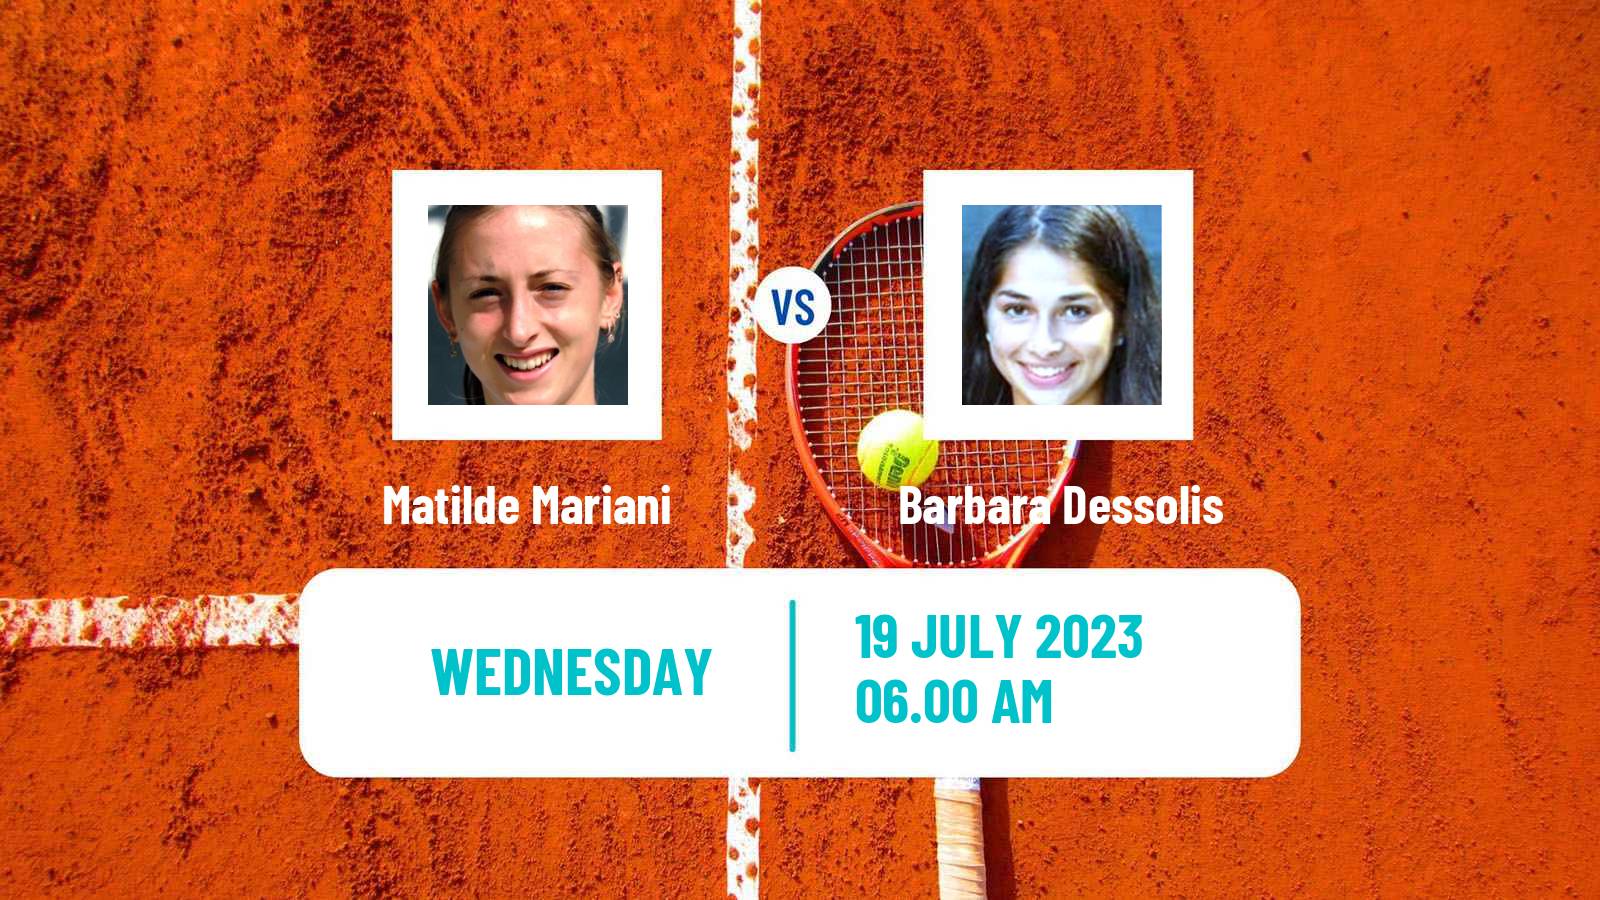 Tennis ITF W15 Les Contamines Montjoie Women Matilde Mariani - Barbara Dessolis